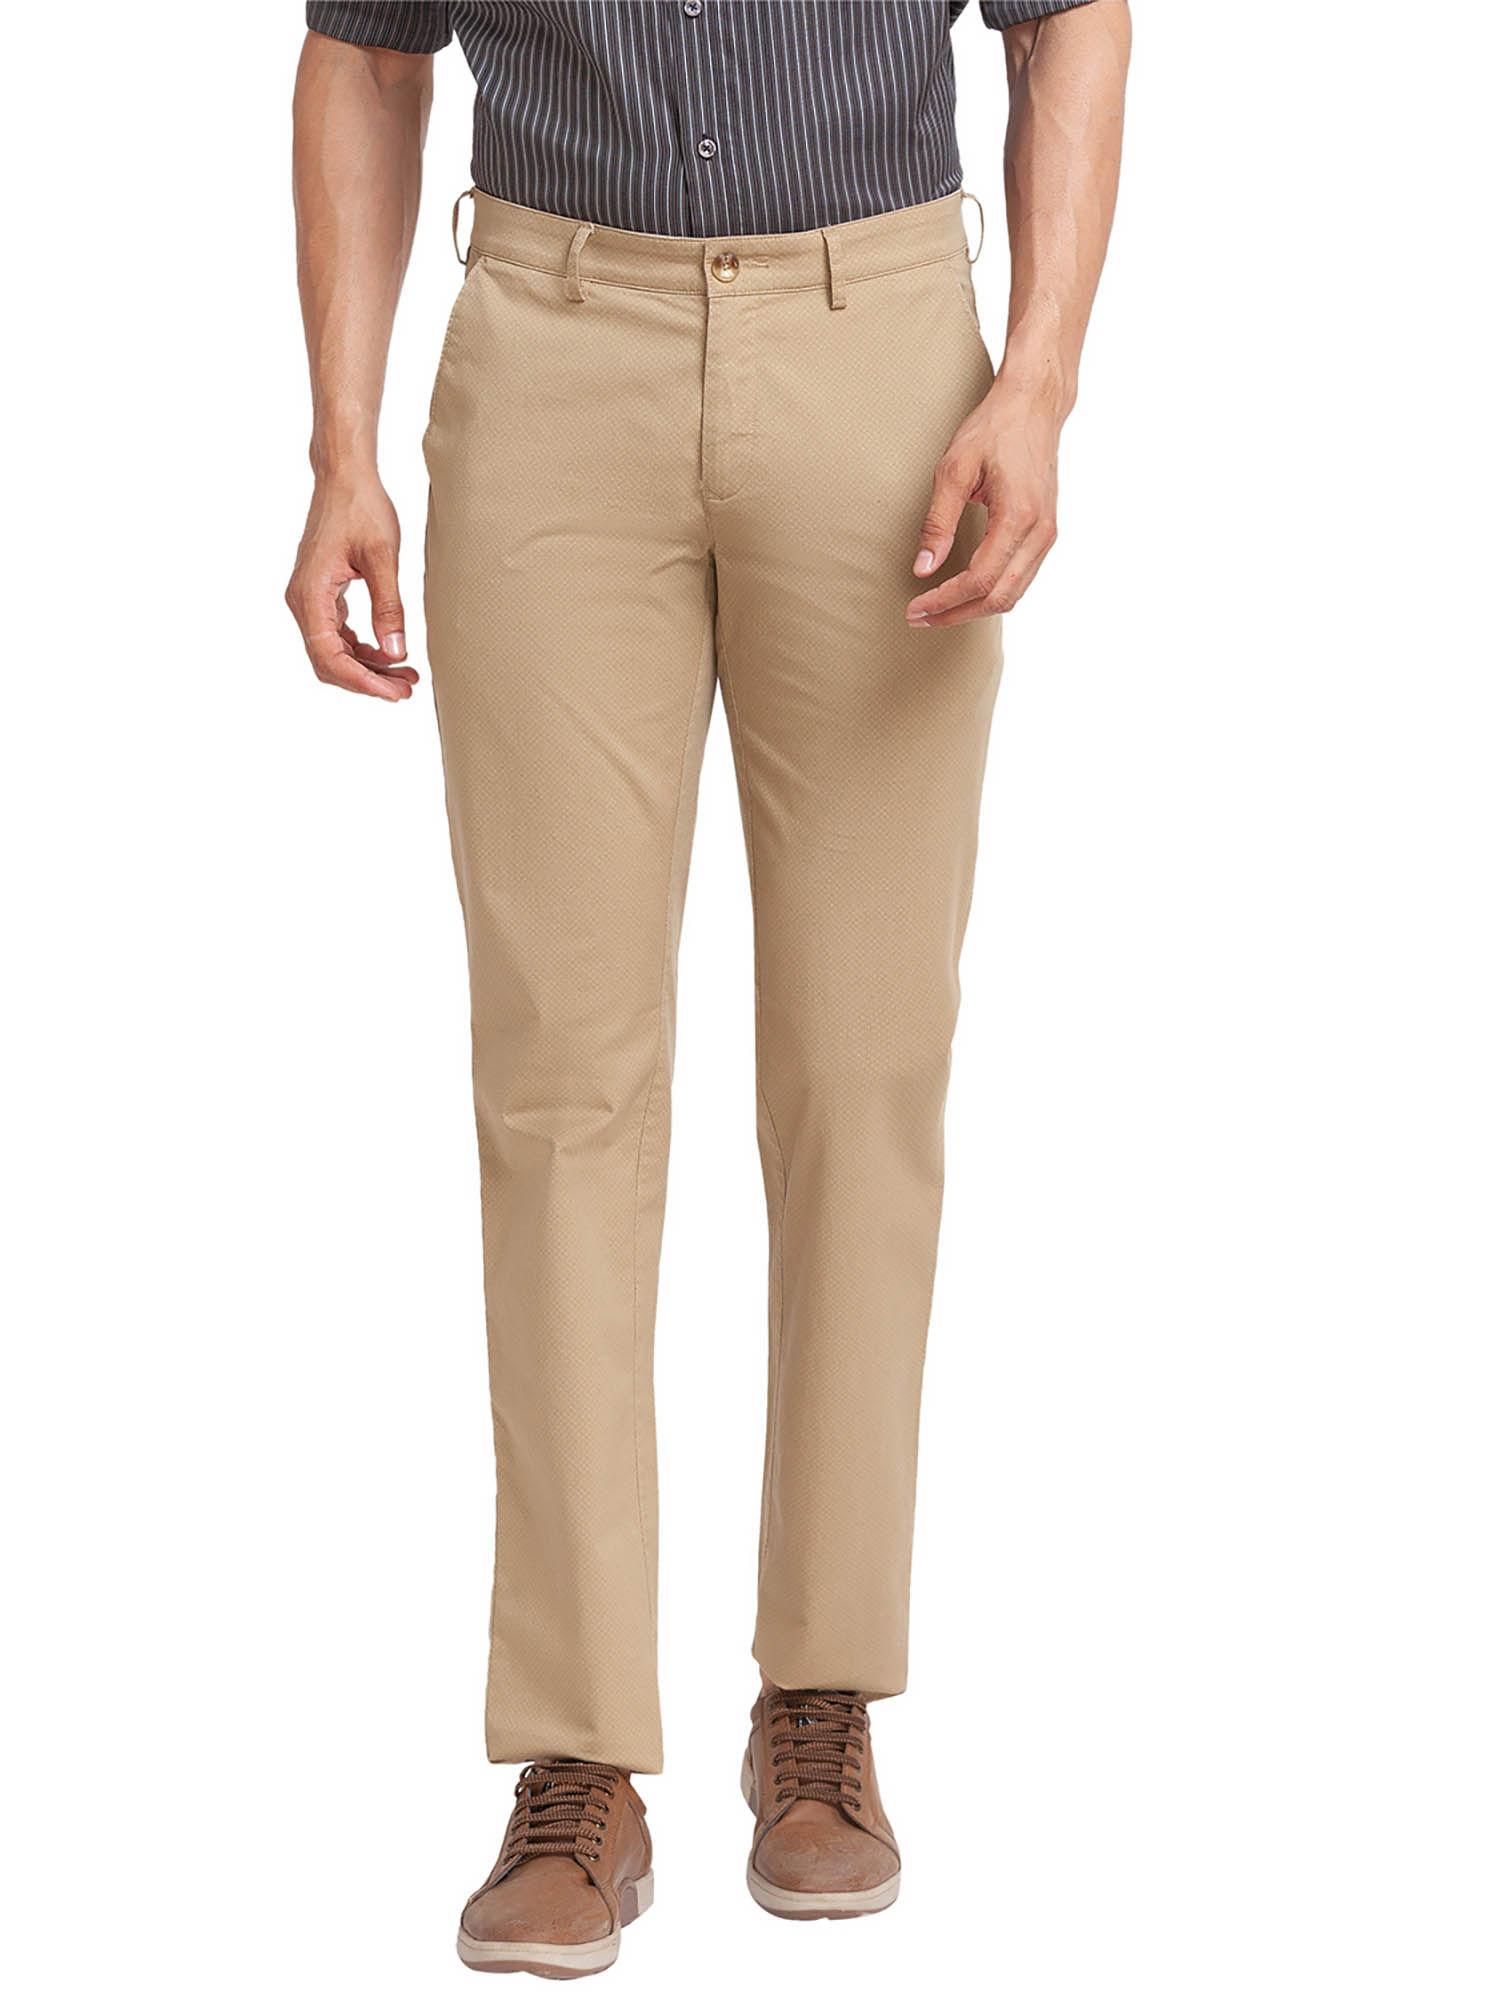 comfortable-fit-printed-brown-trouser